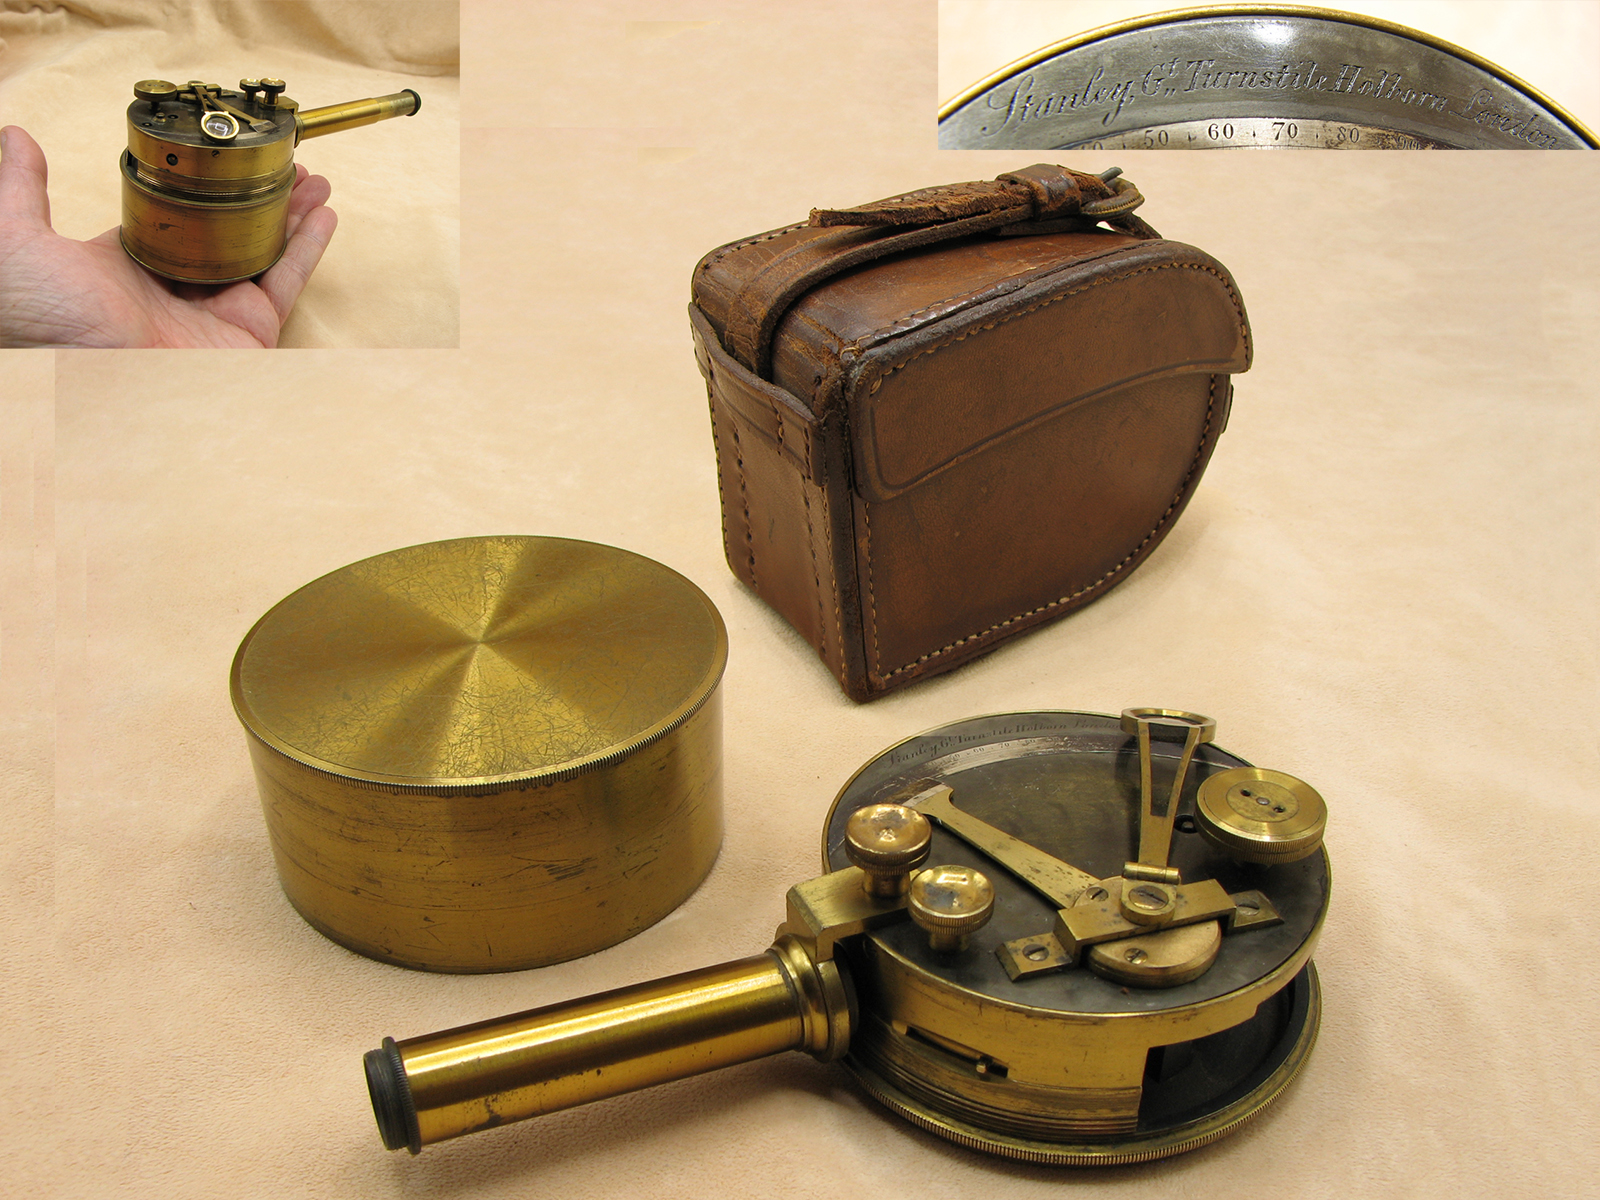 19th century brass pocket sextant signed Stanley, Gt Turnstile, Holborn, London